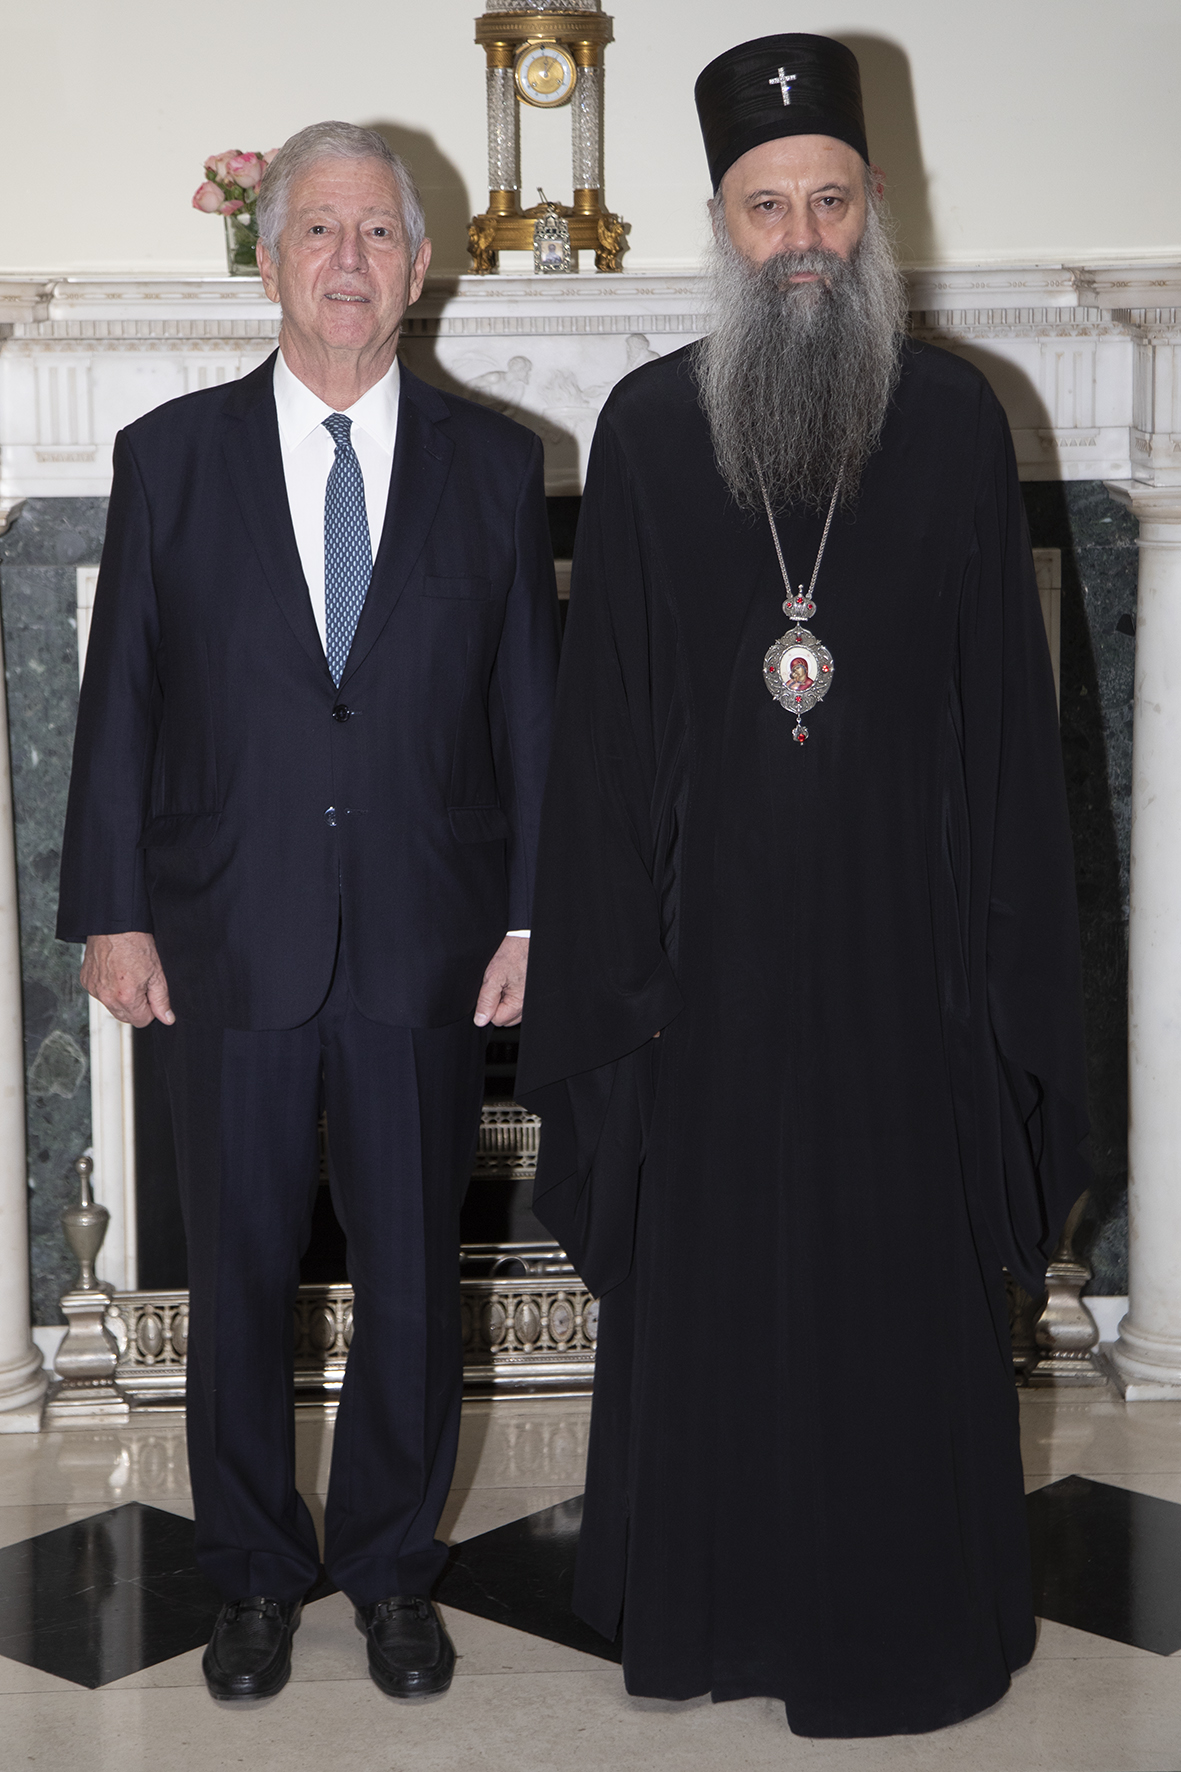 His Holiness Patriarch Porfirije and HRH Crown Prince Alexander